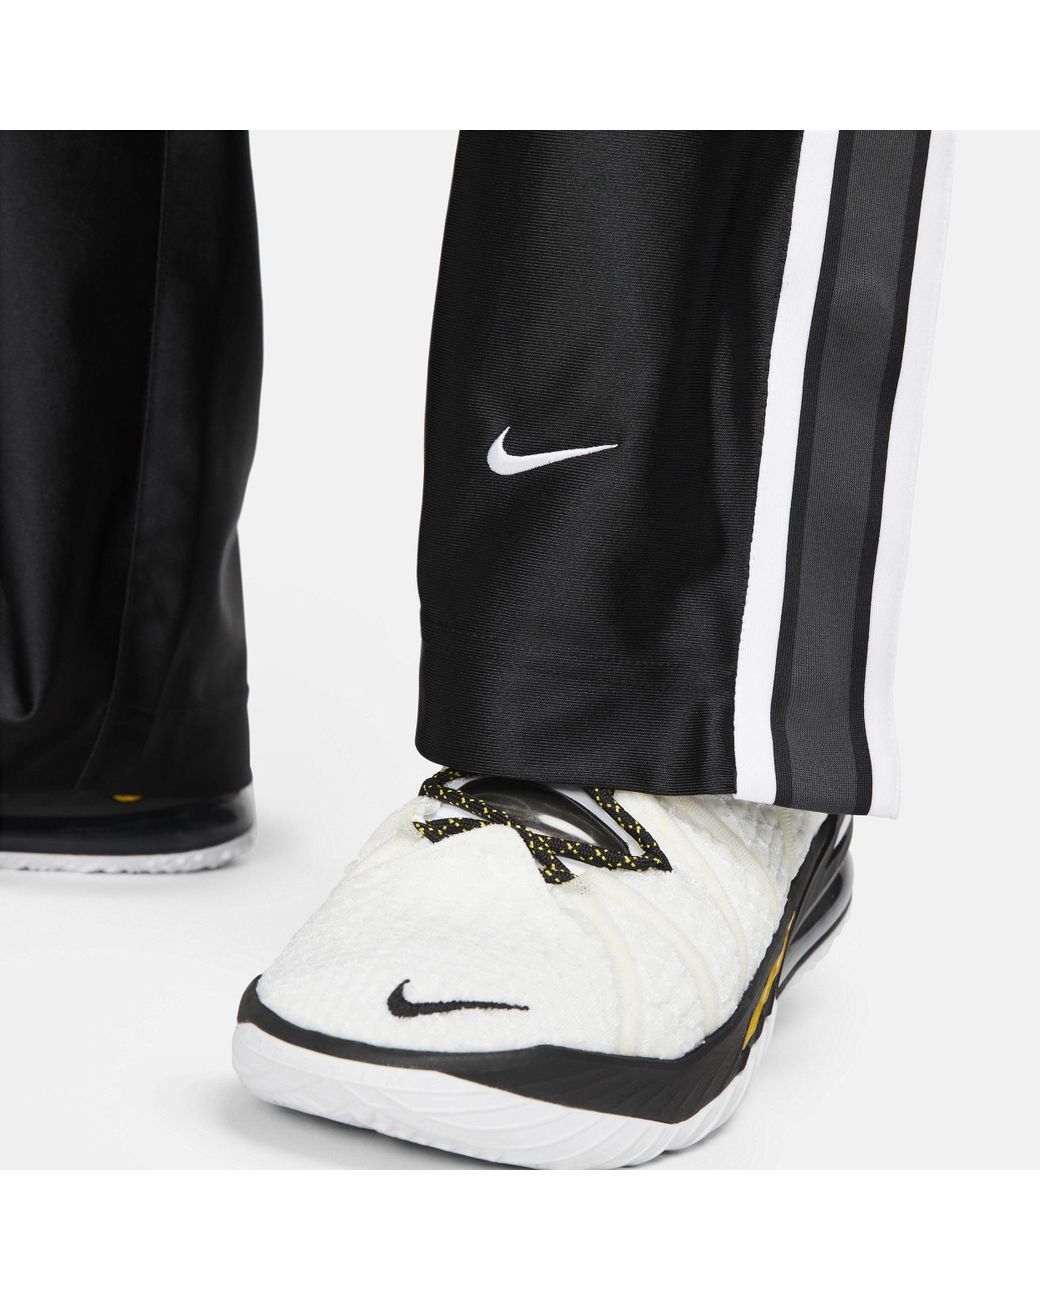 Nike Circa Tearaway Basketball Pants In Black, for Men